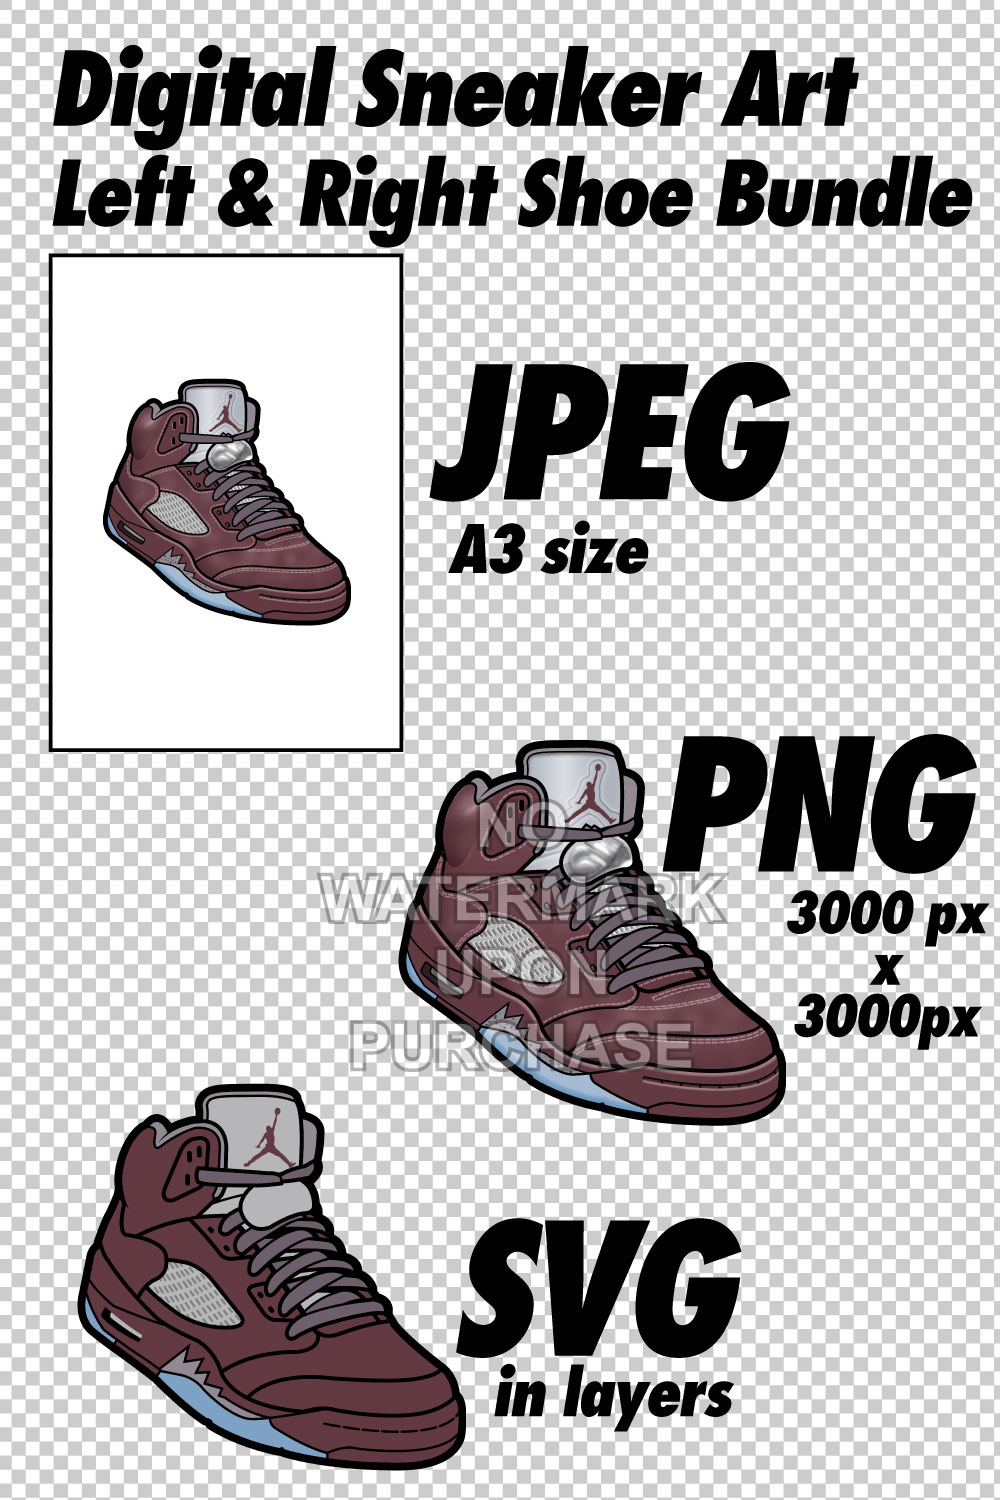 Air Jordan 5 Burgundy JPEG PNG SVG Sneaker Art right & left shoe bundle pinterest preview image.